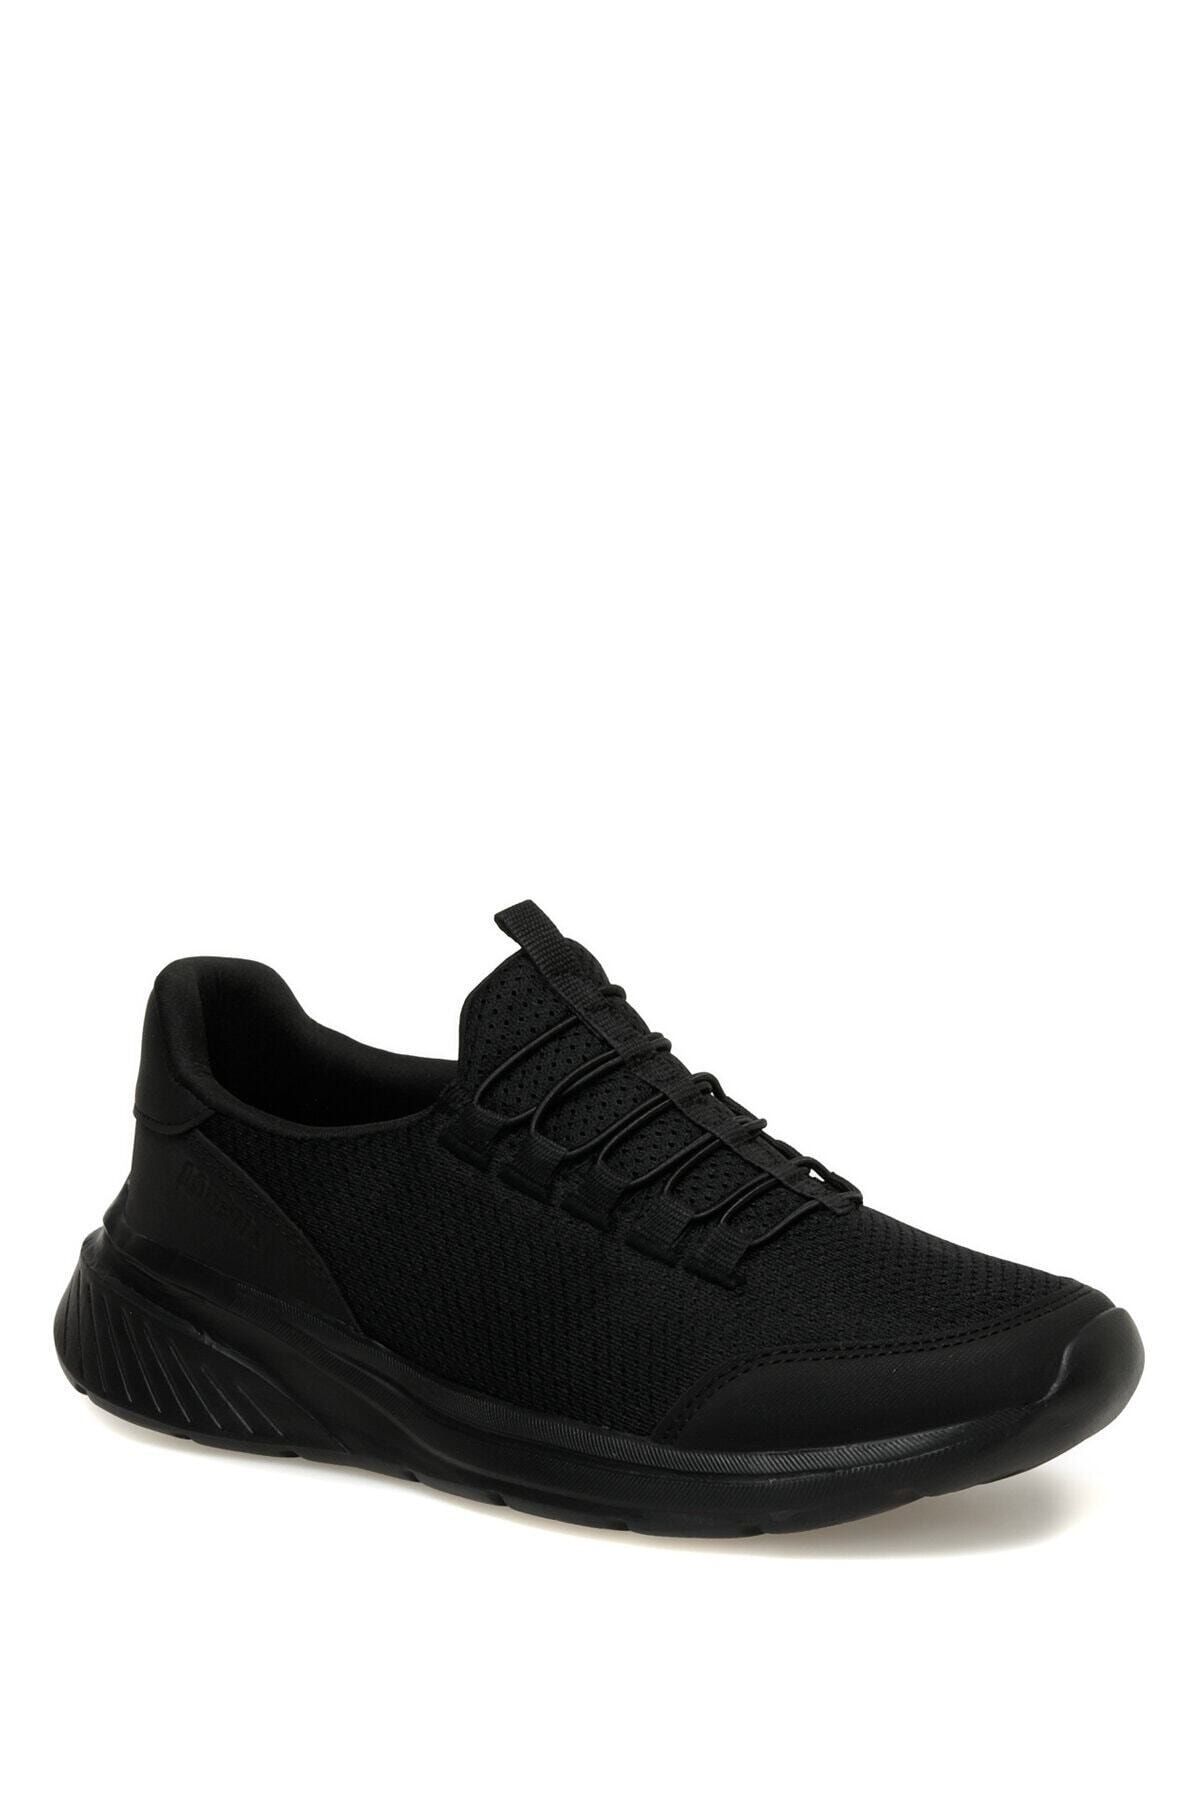 Kinetix Plazo Tx 3fx Siyah Erkek Comfort Ayakkabı